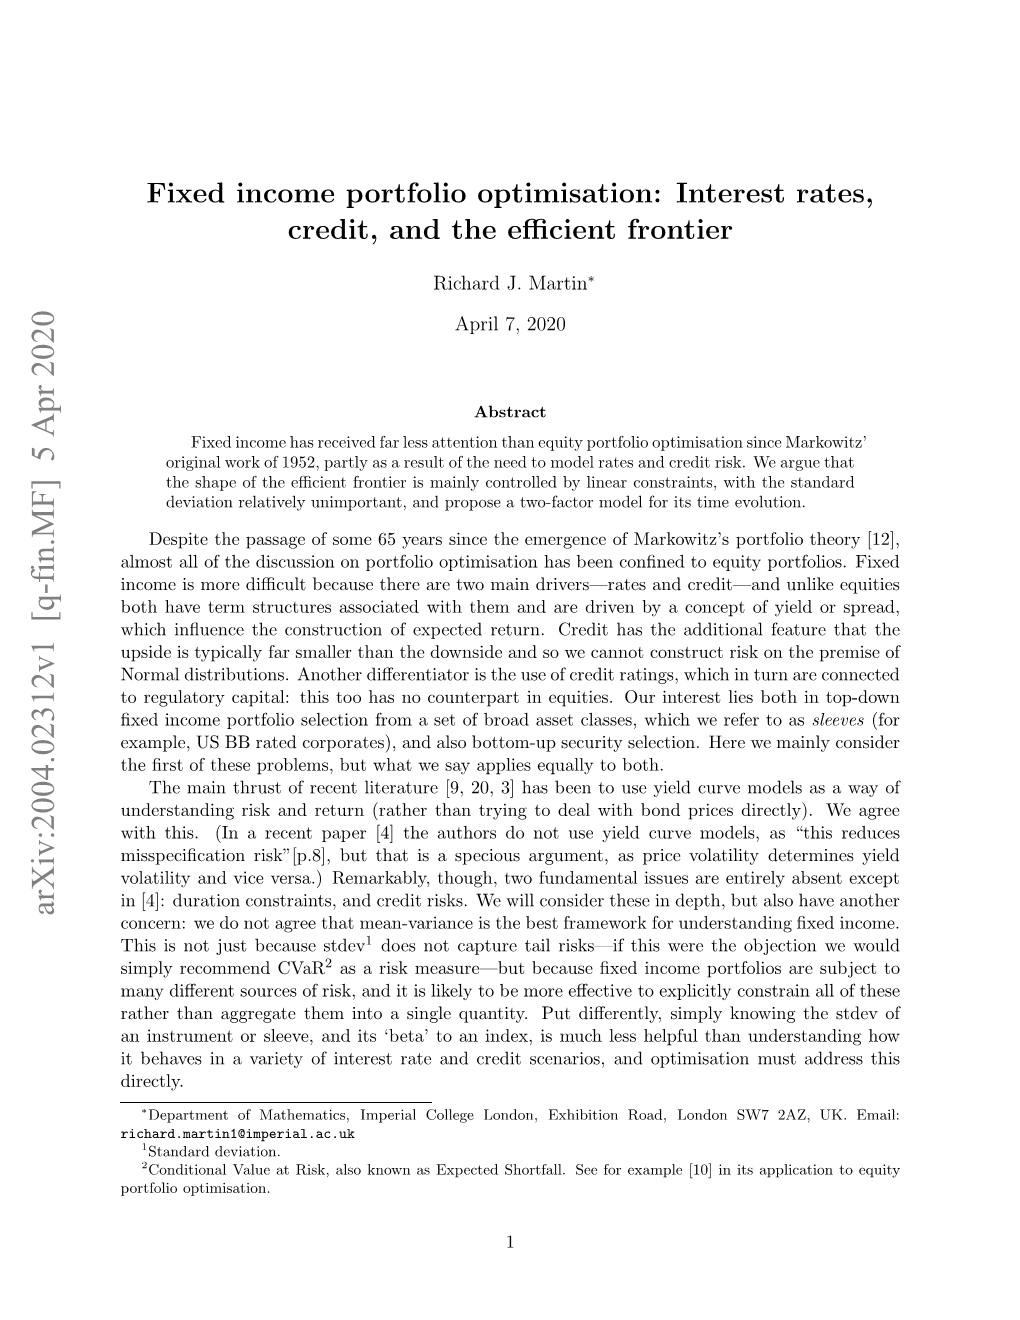 Fixed Income Portfolio Optimisation: Interest Rates, Credit, and The